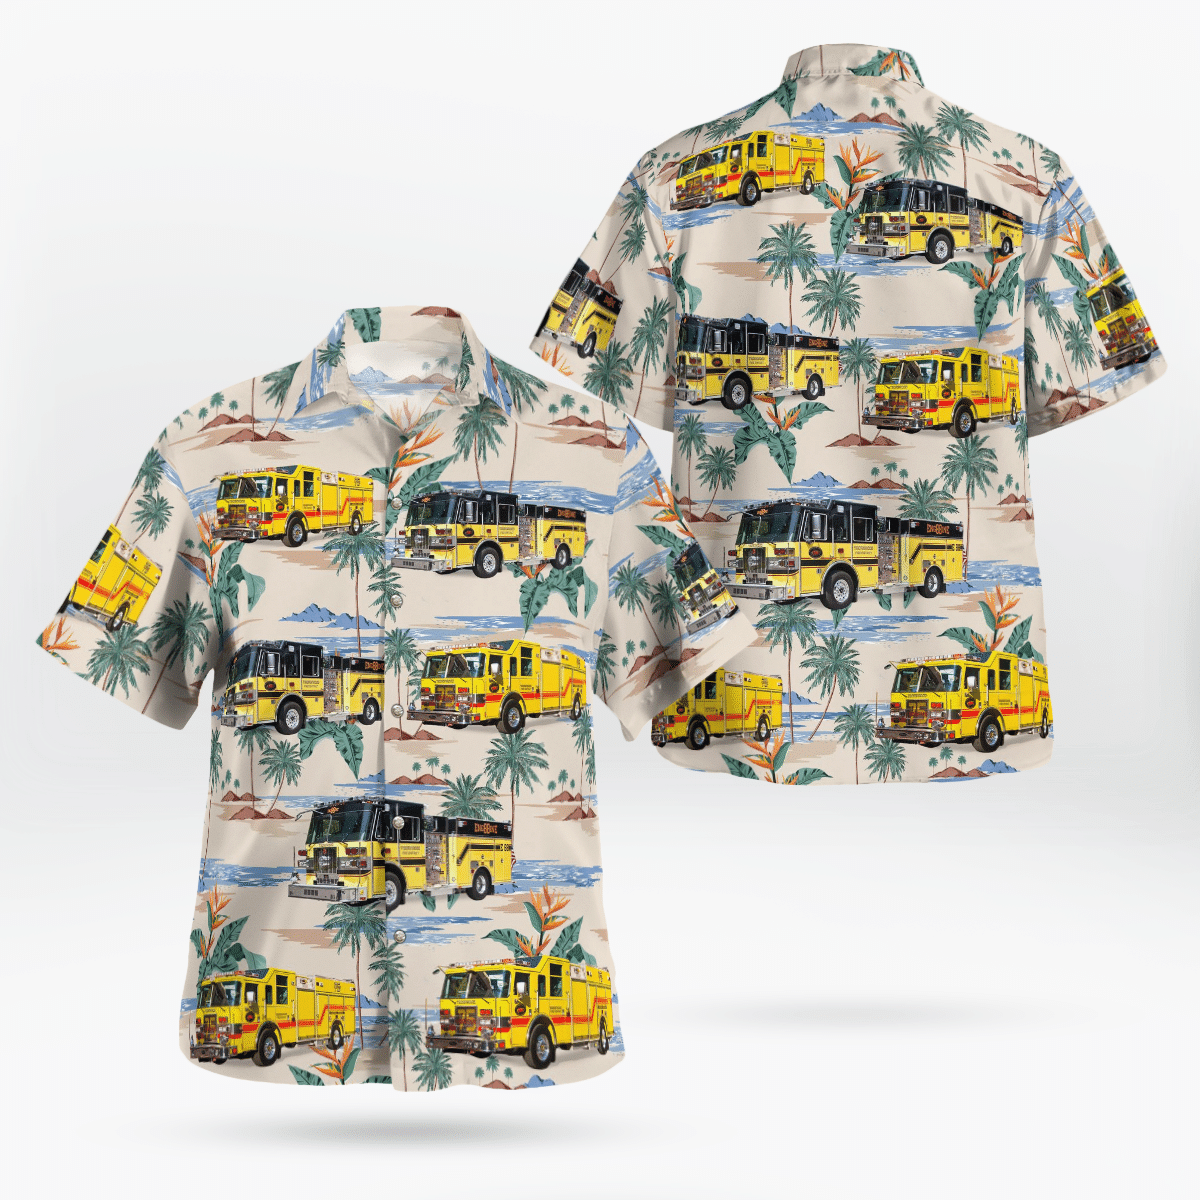 BEST Thornwood, New York, Thornwood Fire Department 3D Aloha Shirt1